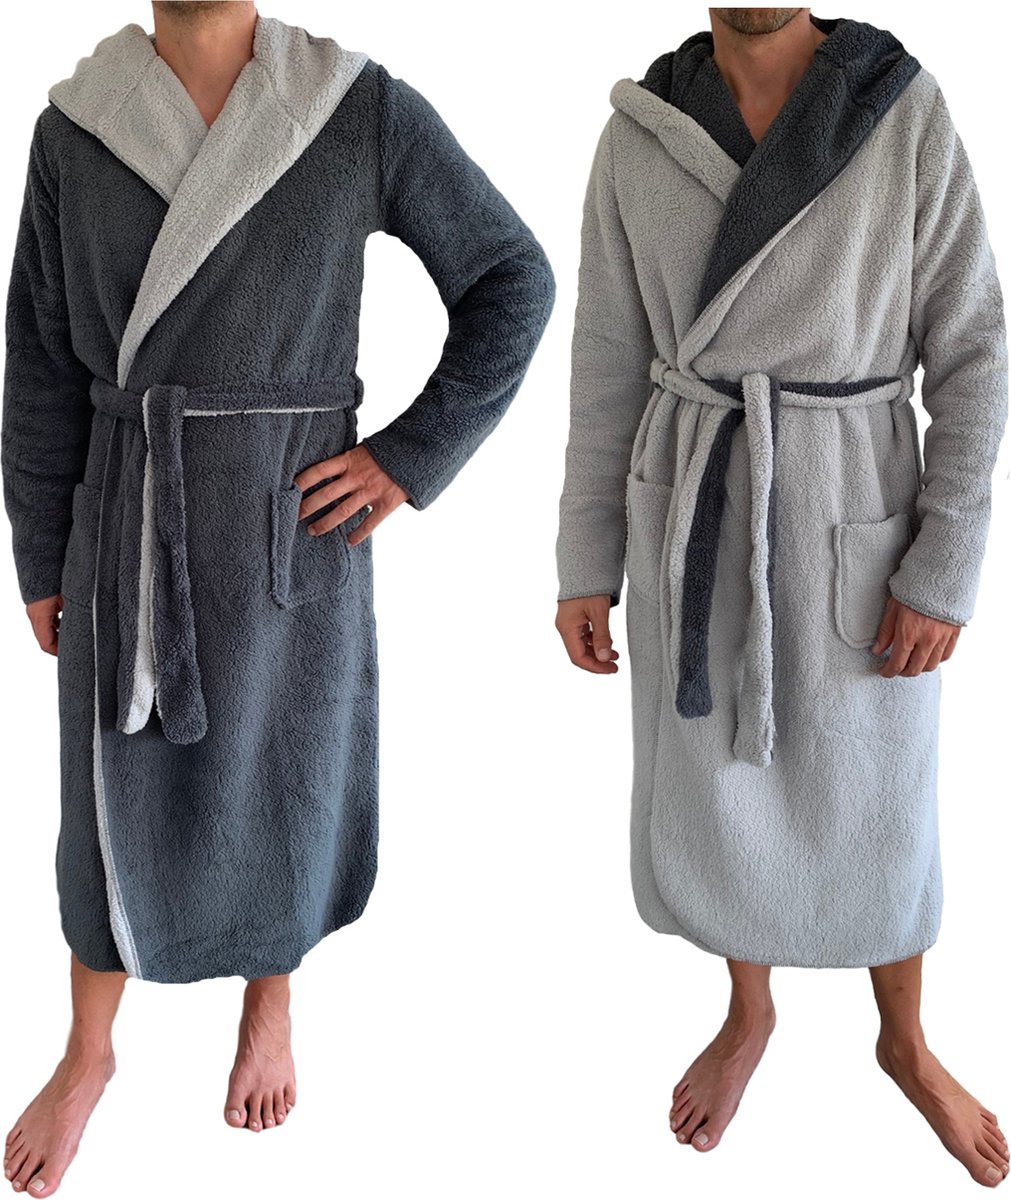 HOMELEVEL Sherpa Heren Omkeerbare Hooded Dressing Gown Huisjas Badjassen Winter Warm Lichtgrijs Maat XL